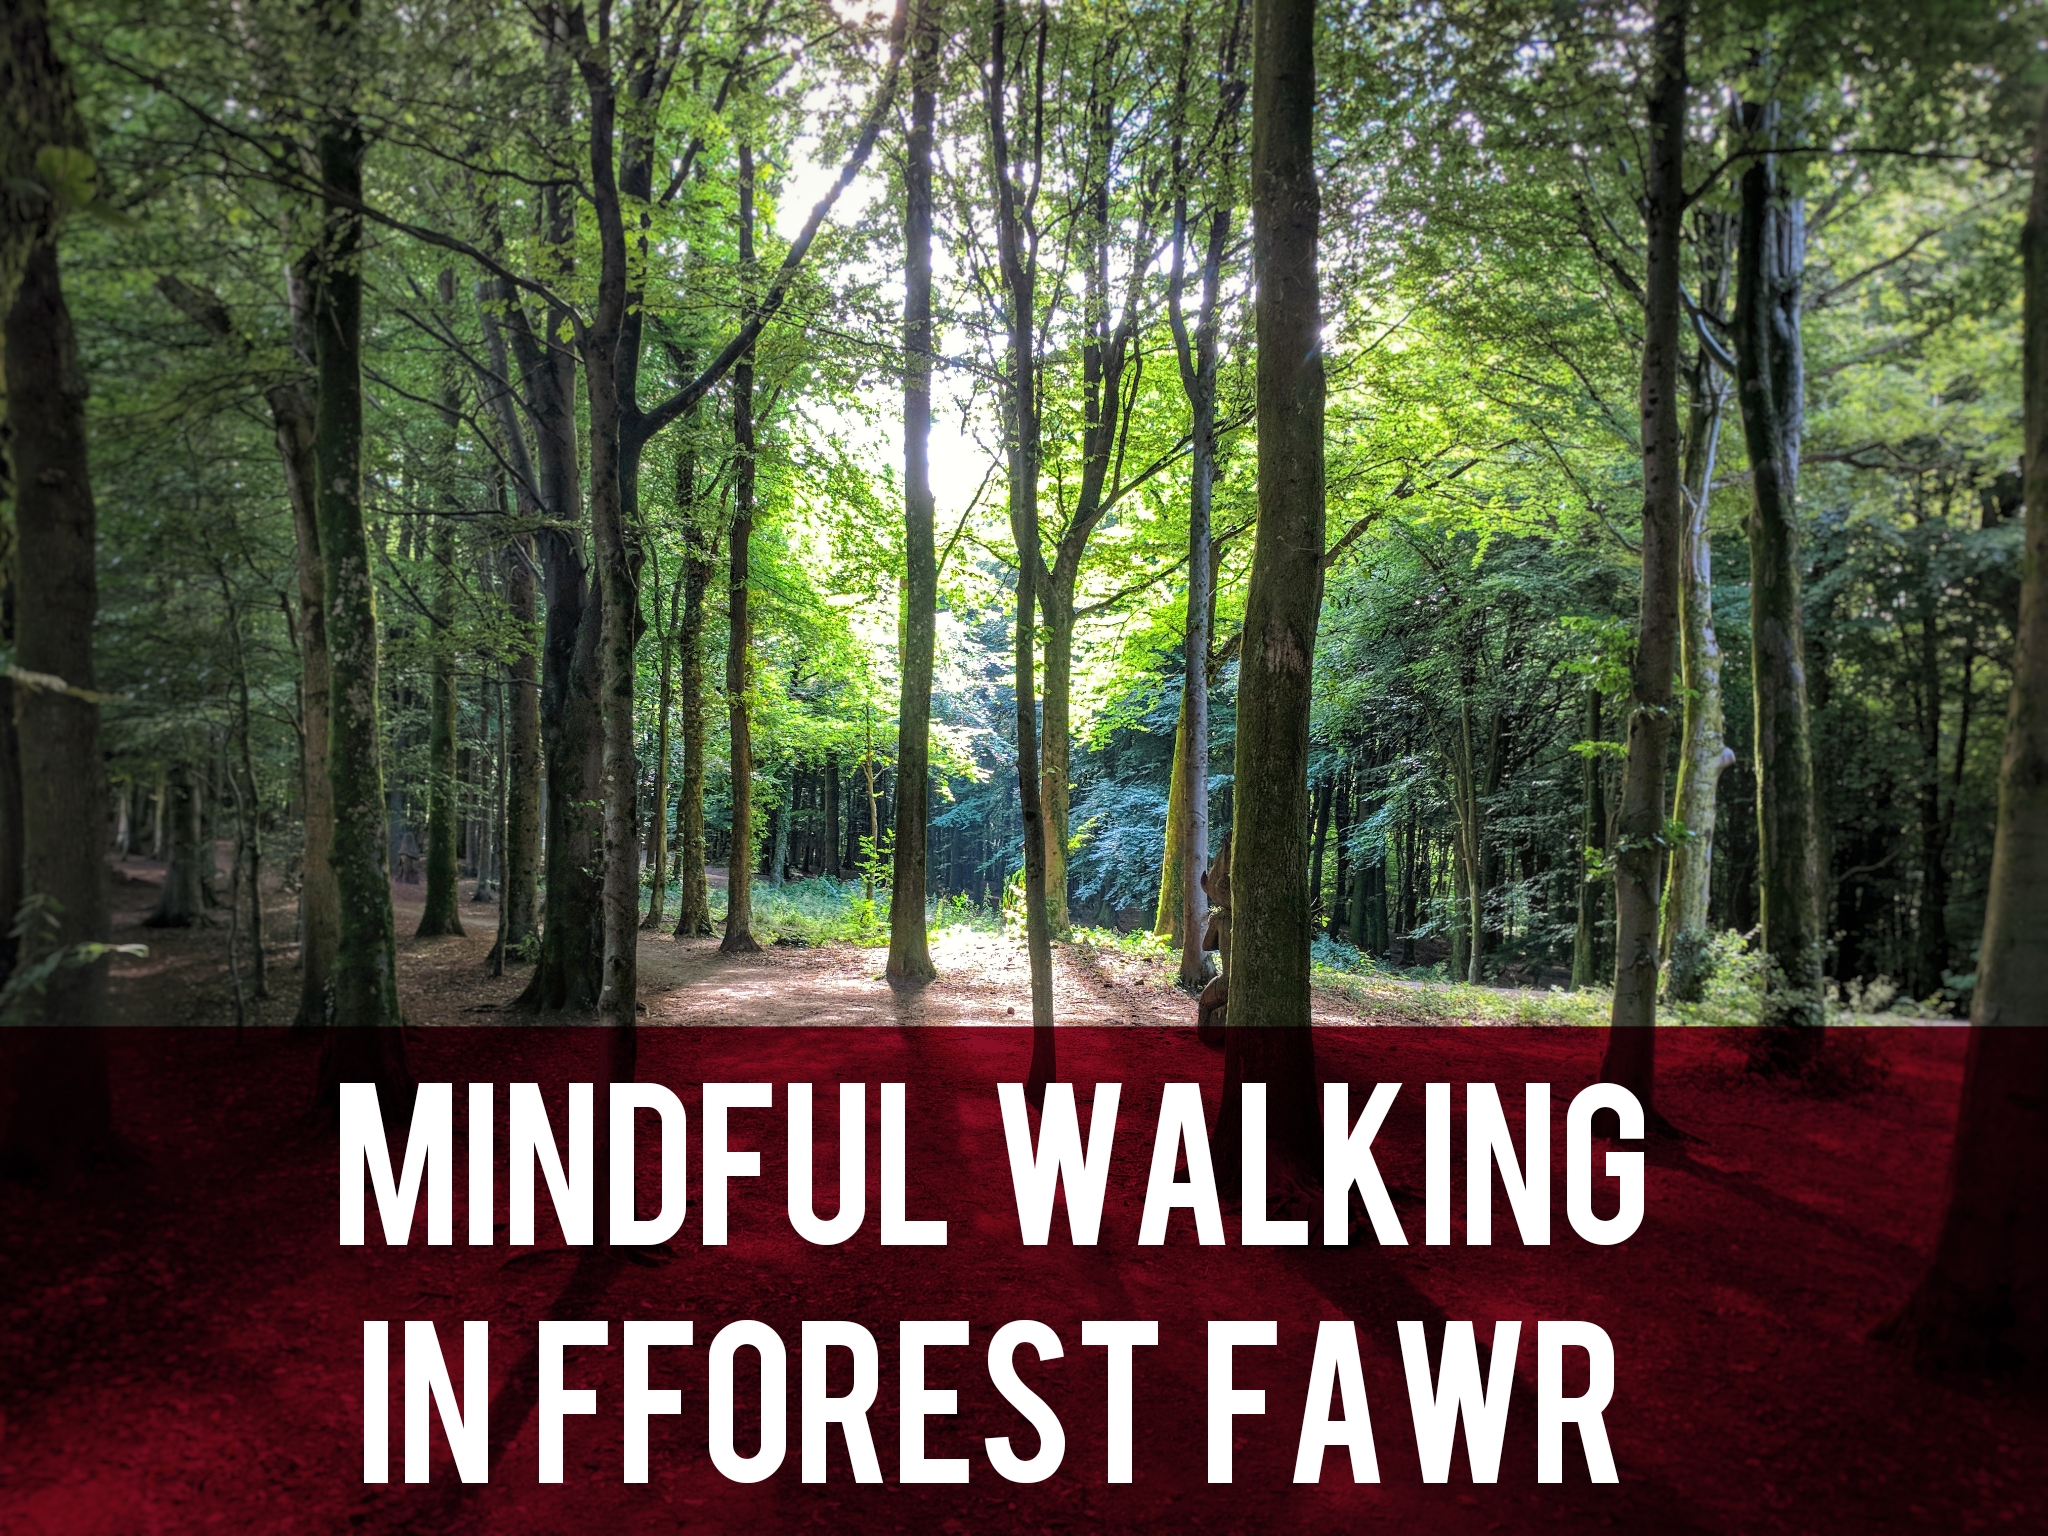 Mindful walking in Fforest Fawr header